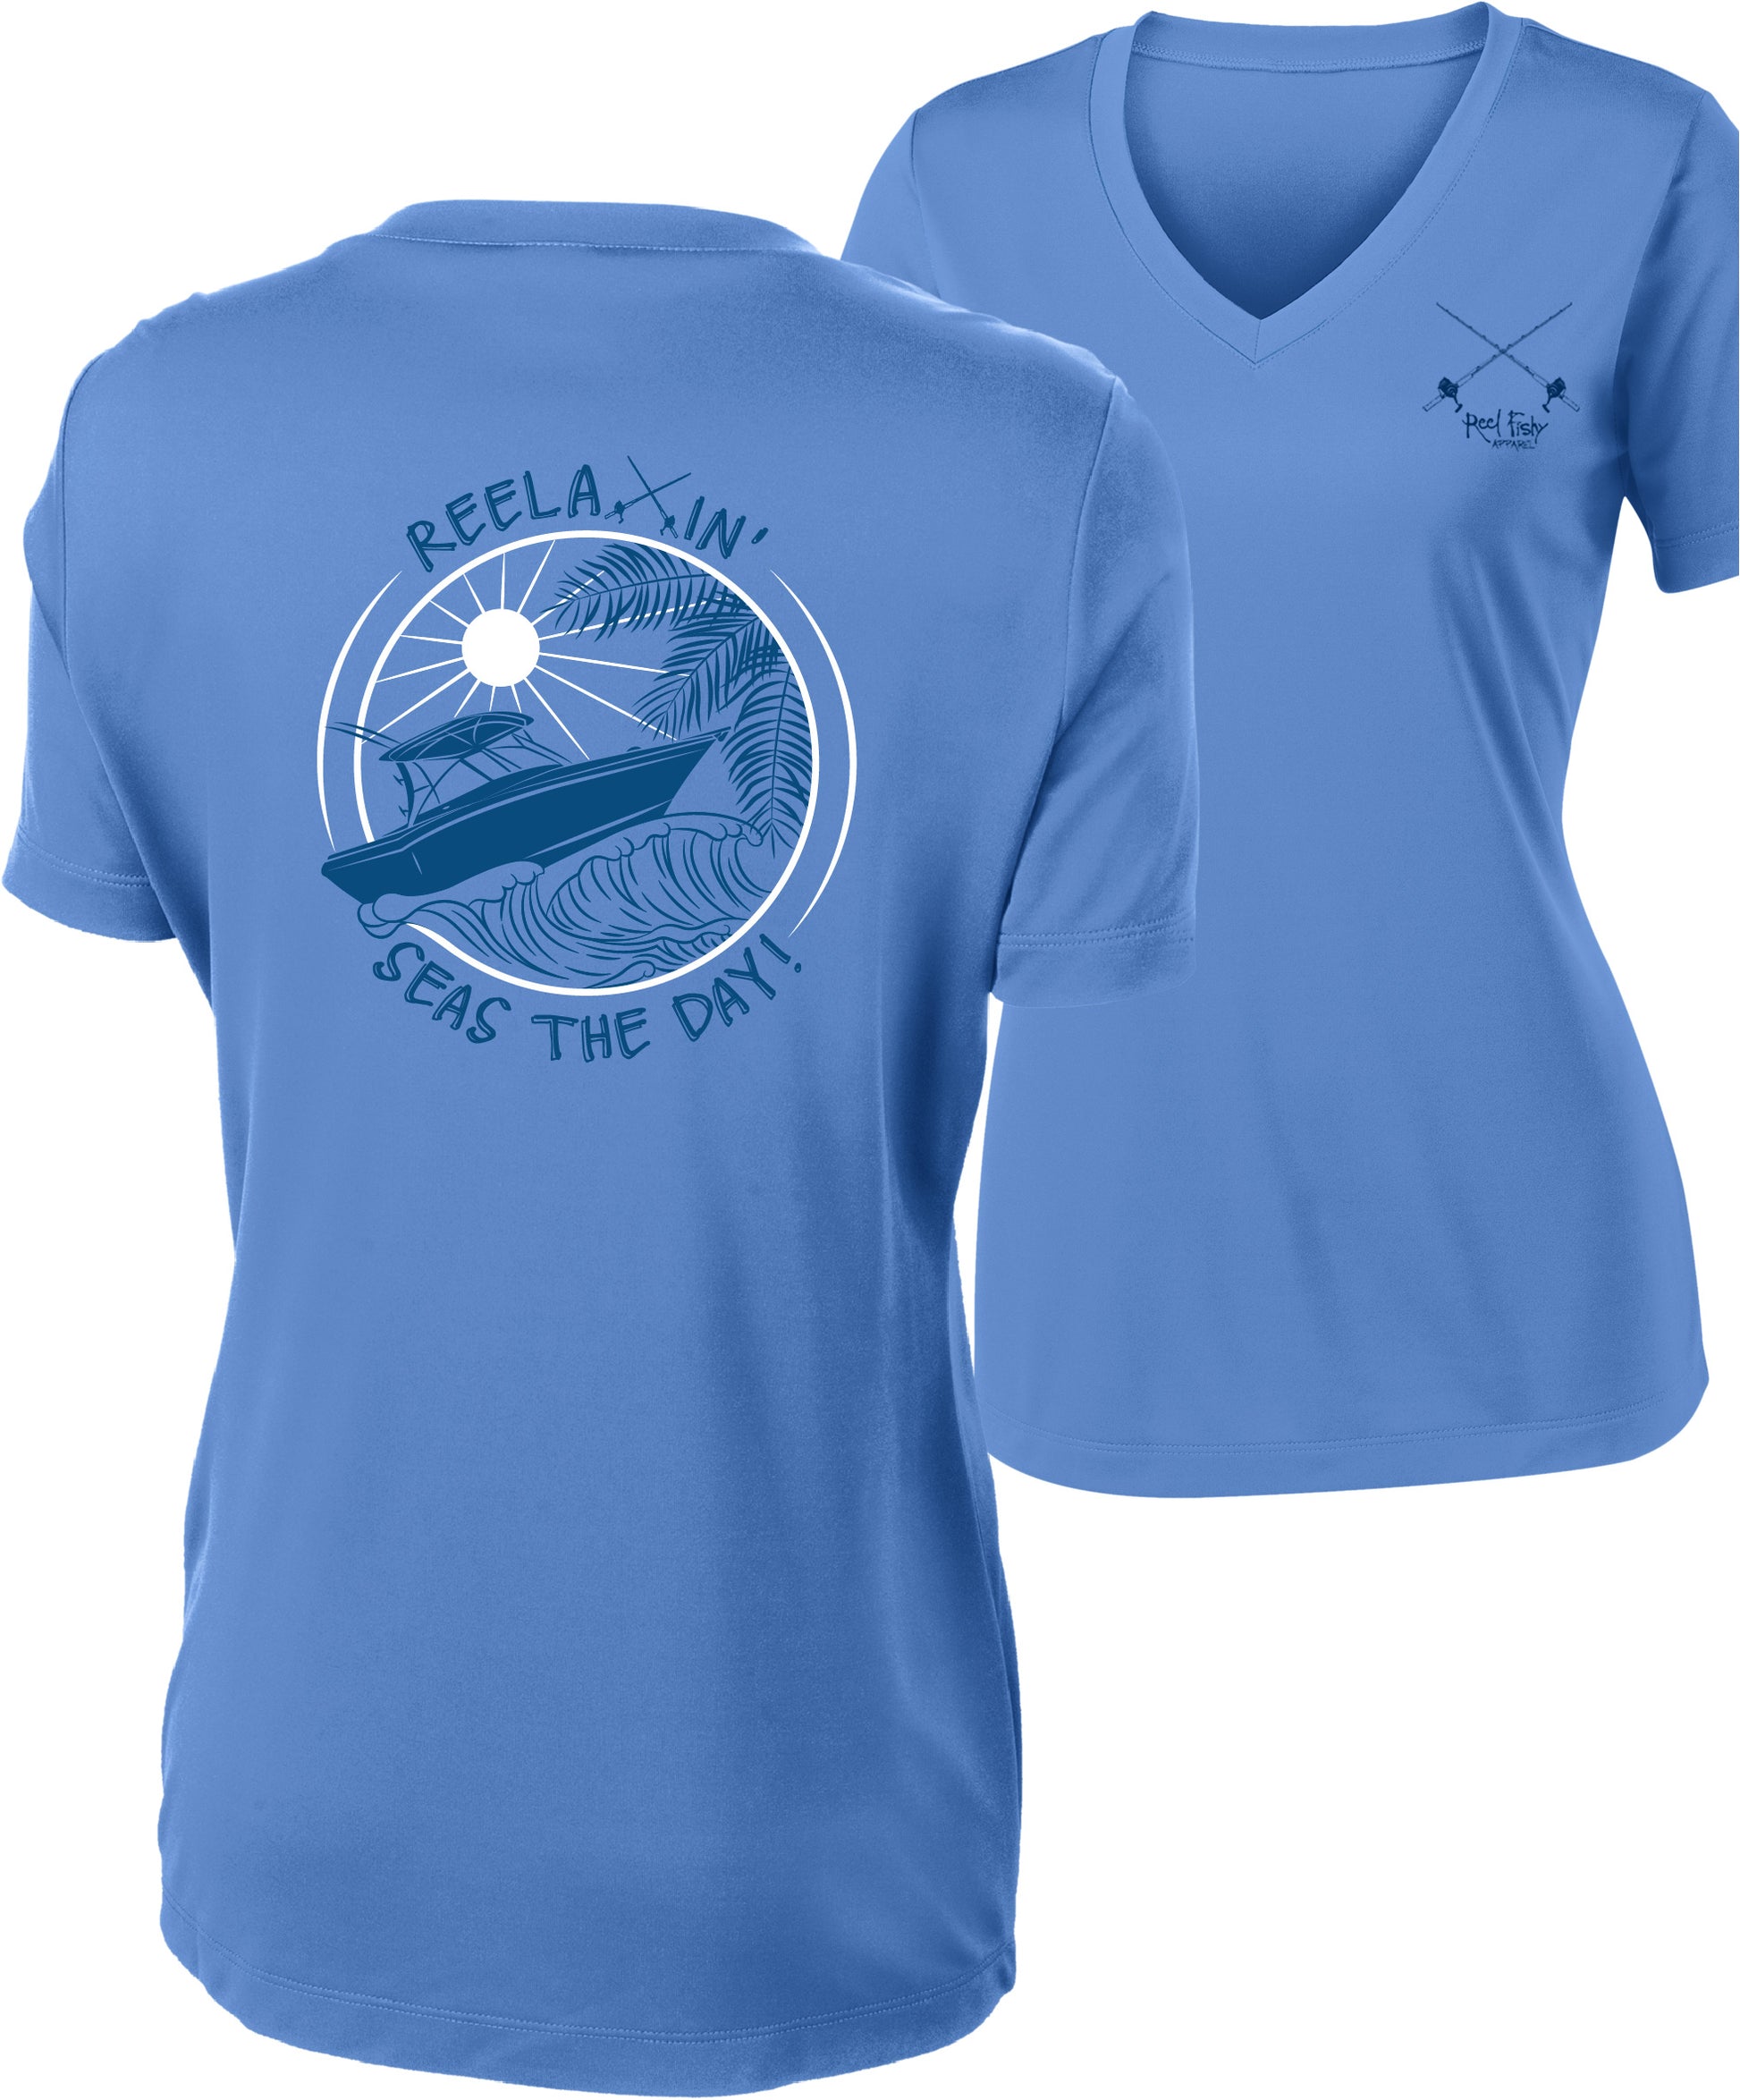 Ladies Lt Blue Reelaxin' V-neck Performance Dry-Fit Fishing Short Sleeve Shirts, 50+ UPF Sun Protection - Reel Fishy Apparel